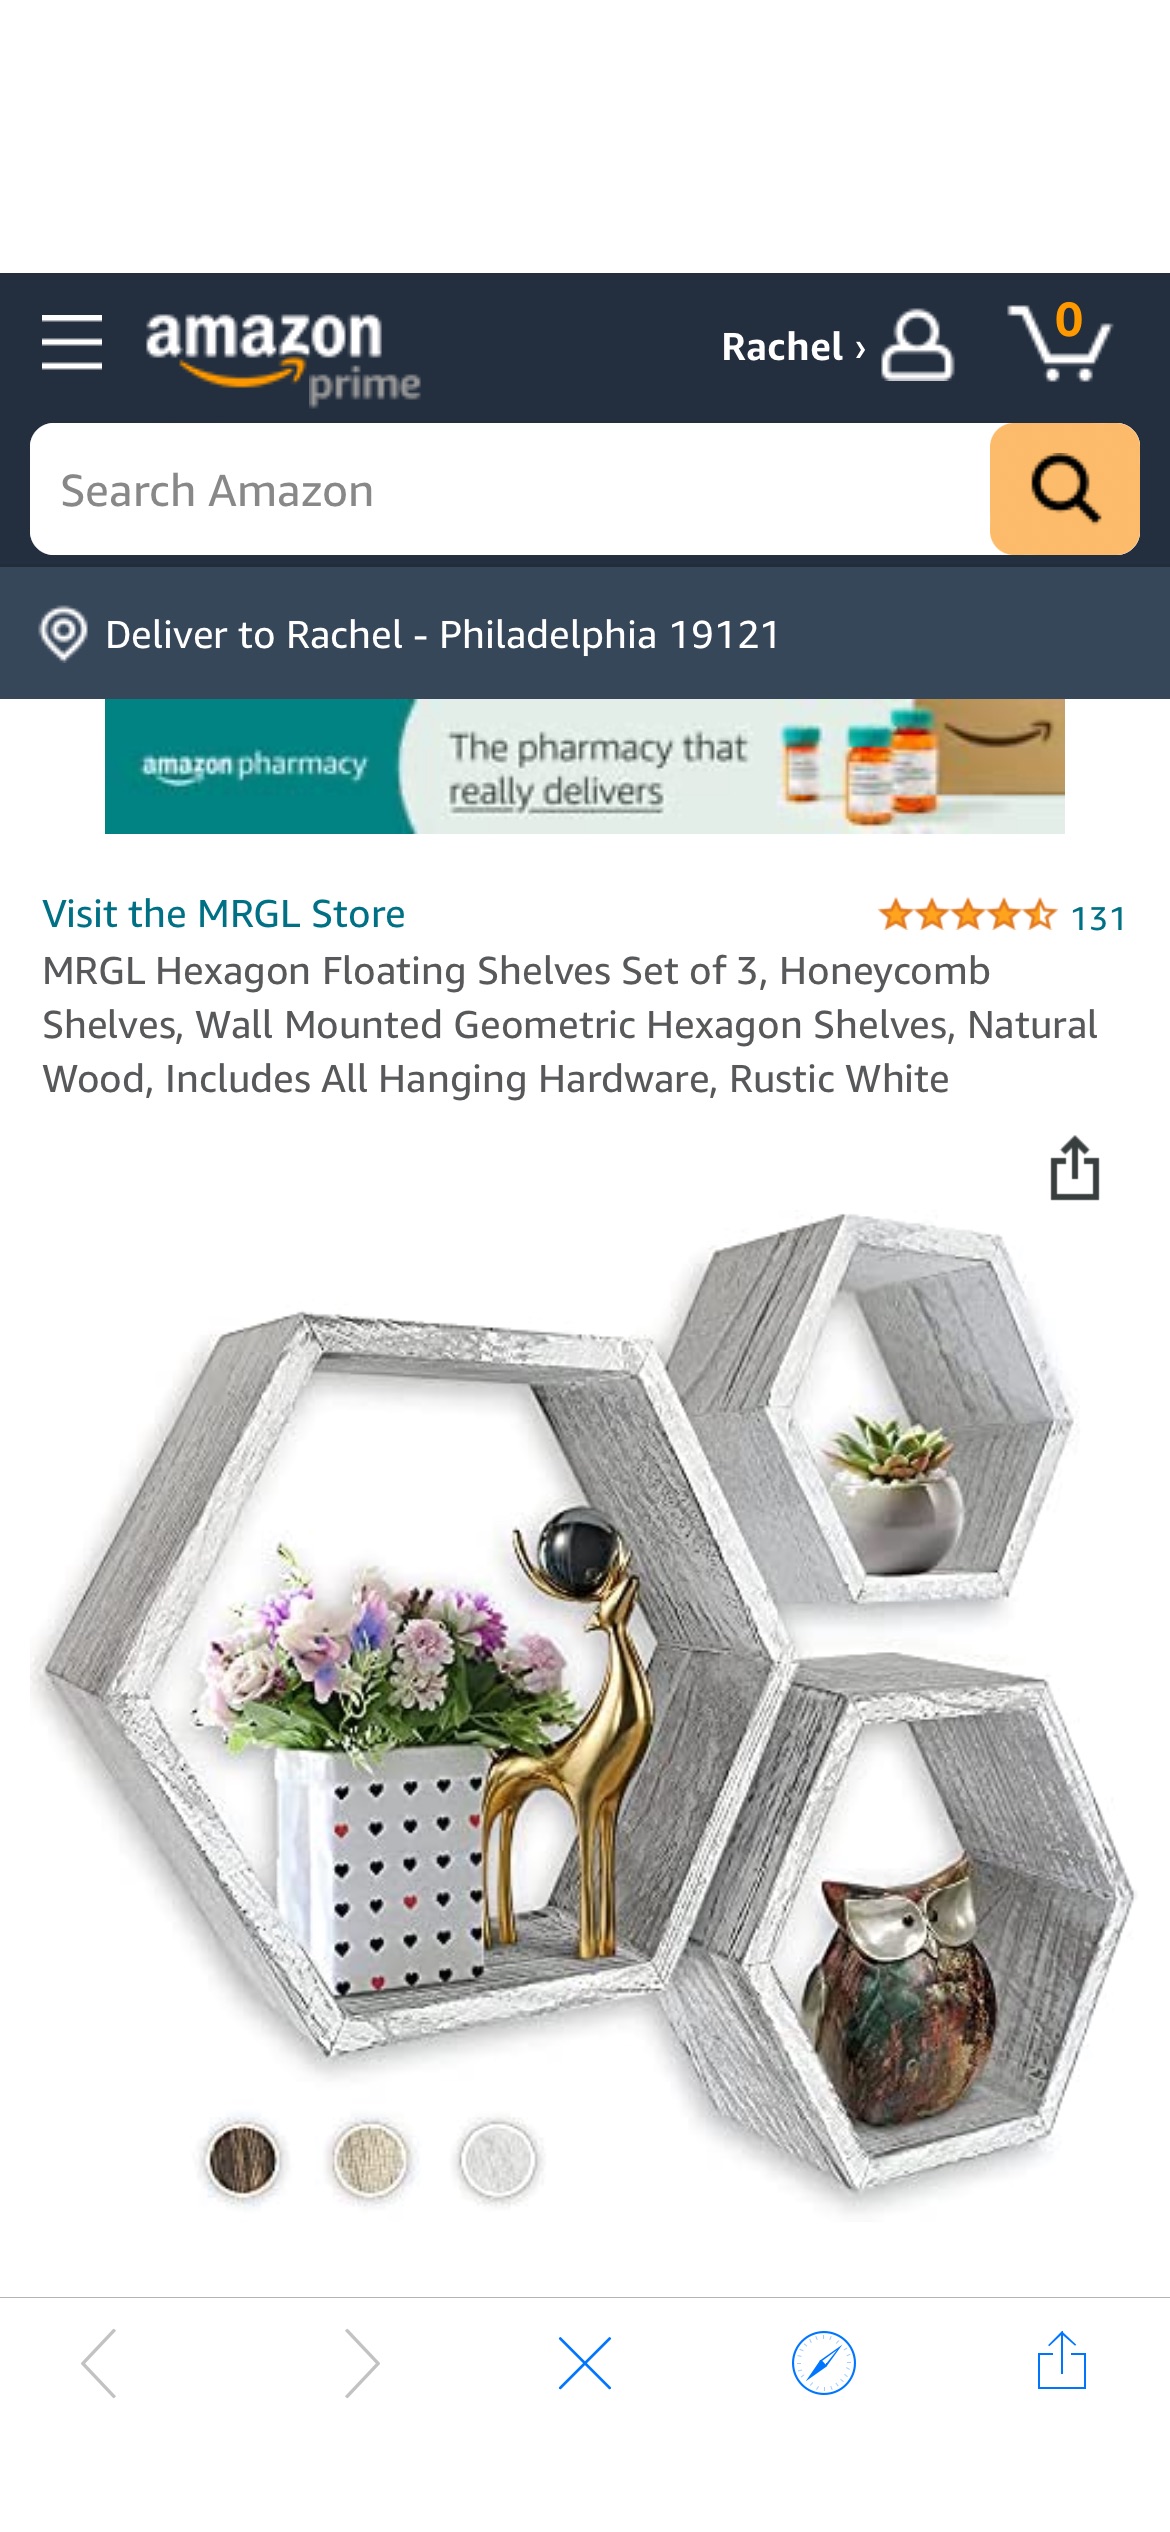 Amazon.com: MRGL Hexagon Floating Shelves Set of 3, Honeycomb Shelves, Wall Mounted Geometric Hexagon Shelves, Natural Wood, Home & Kitchen